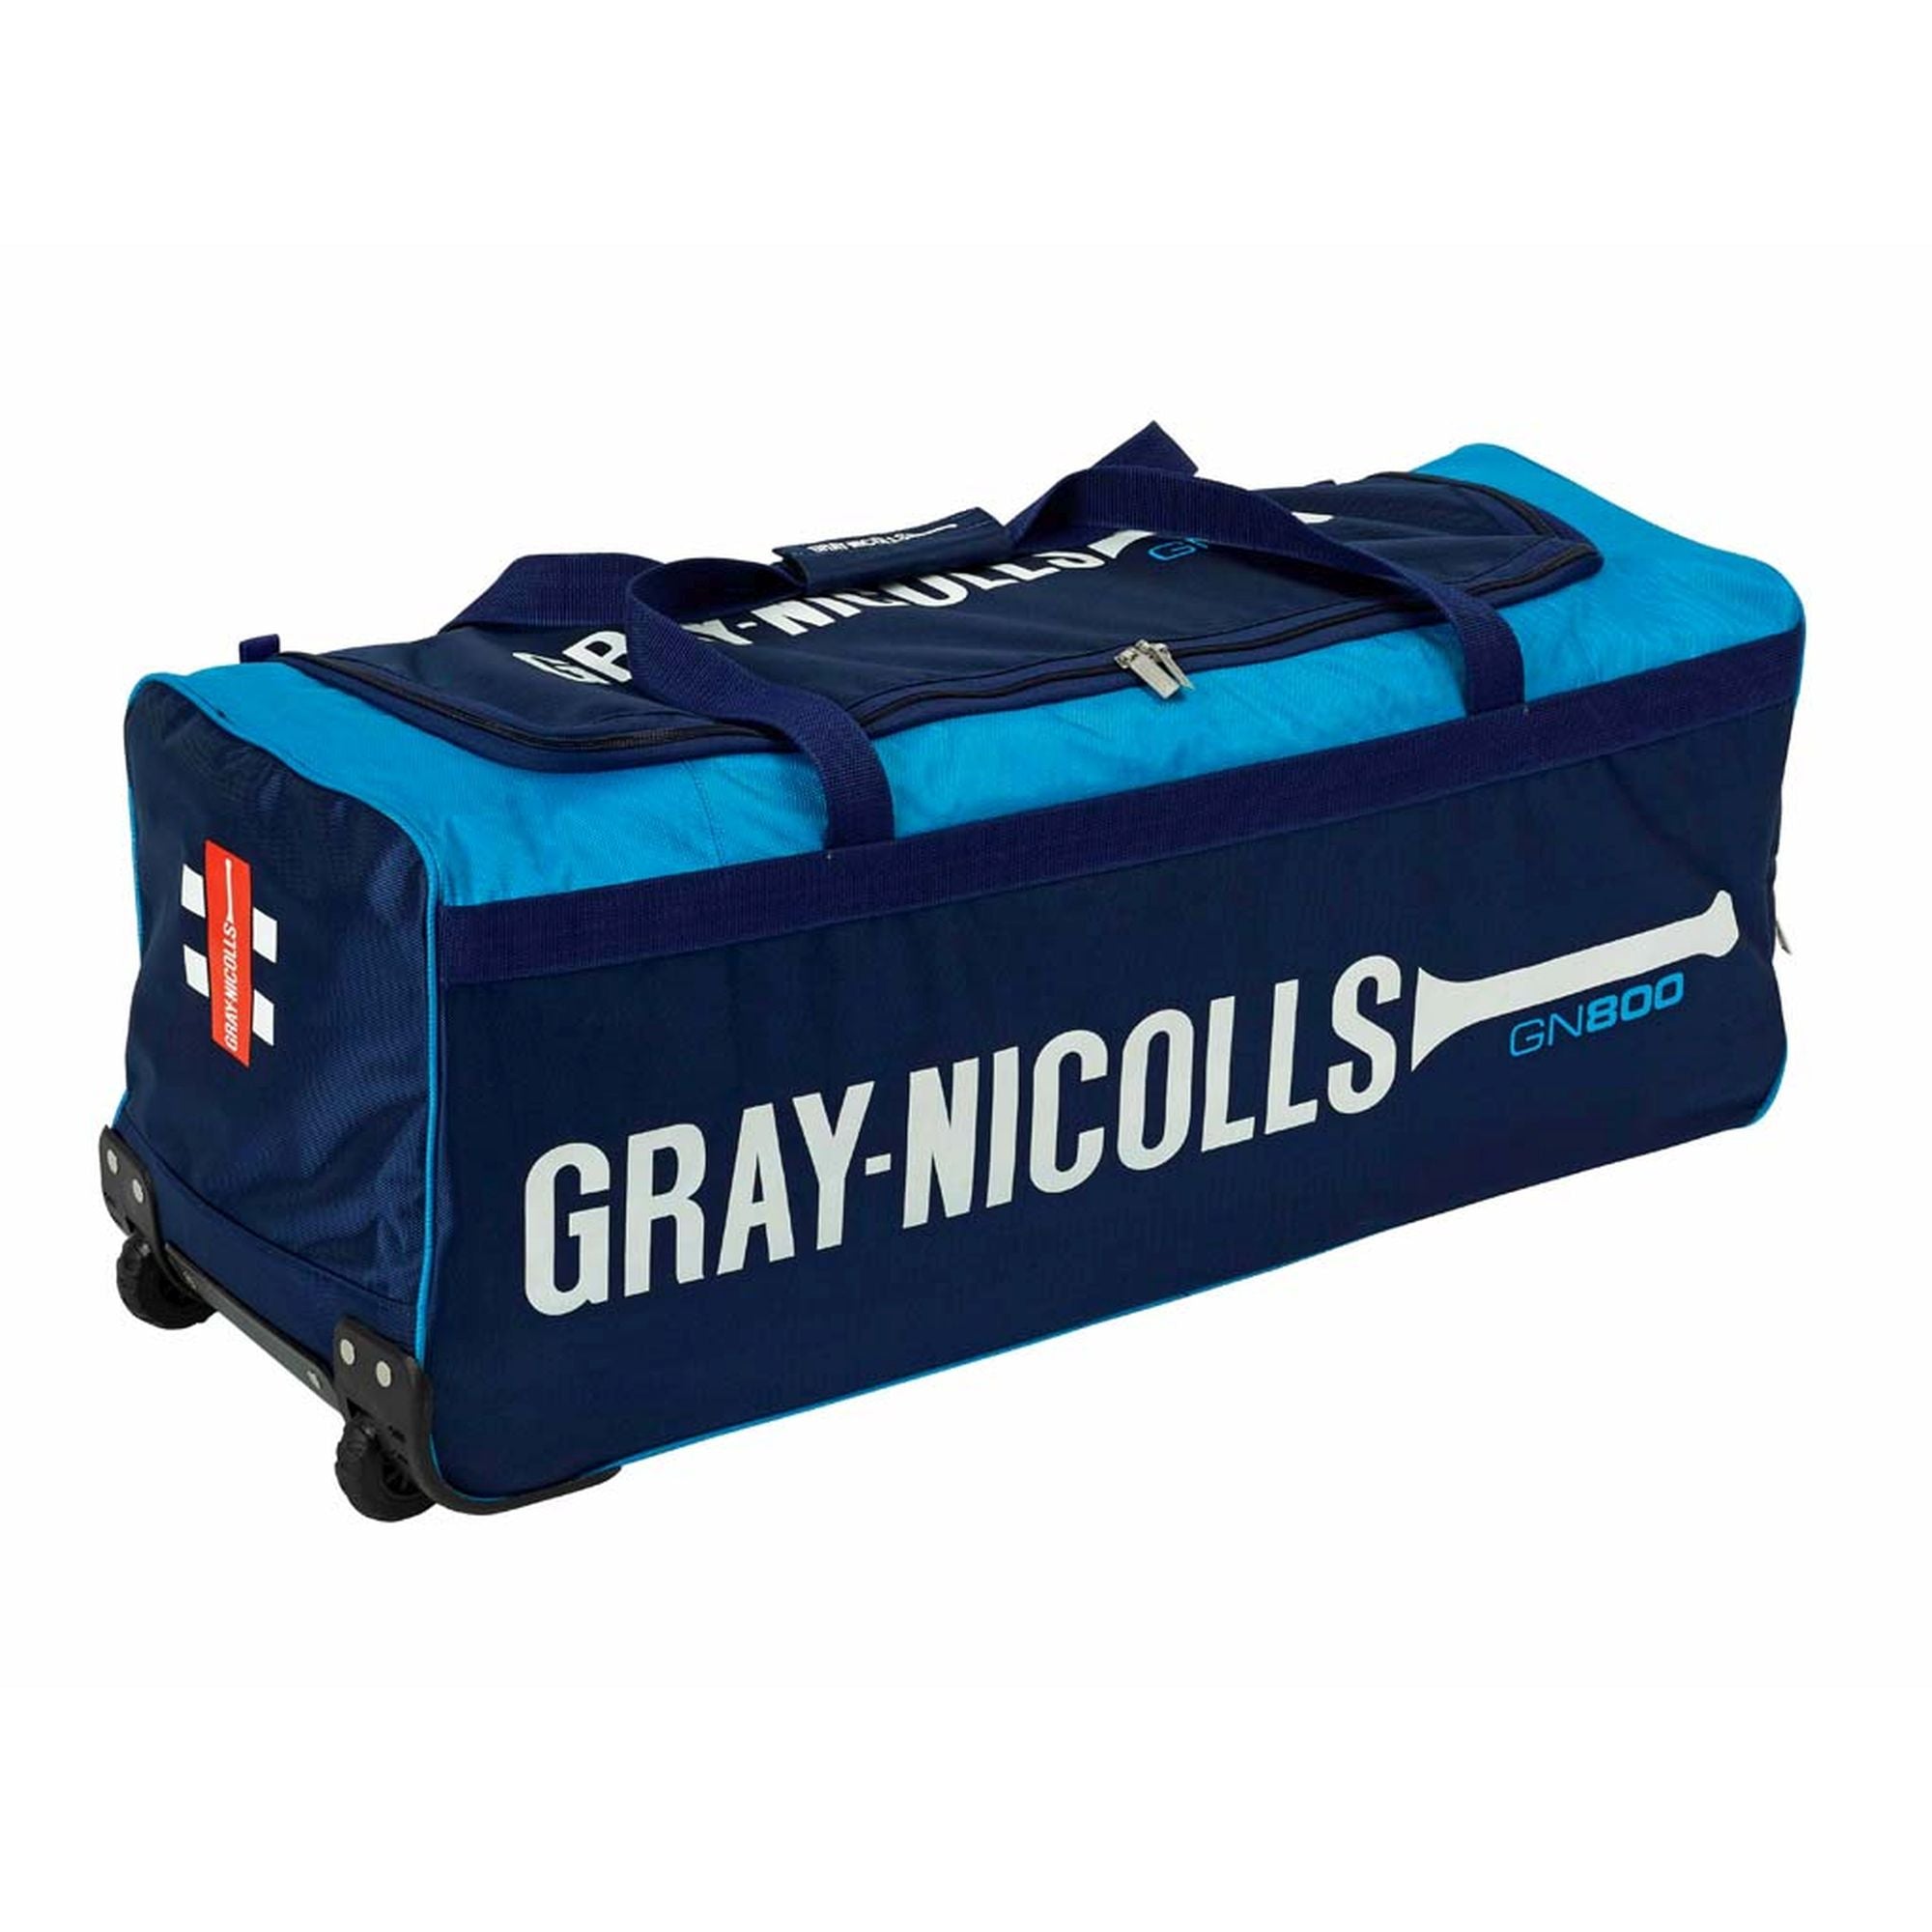 Gray Nicolls GN 800 Cricket Wheel Bag